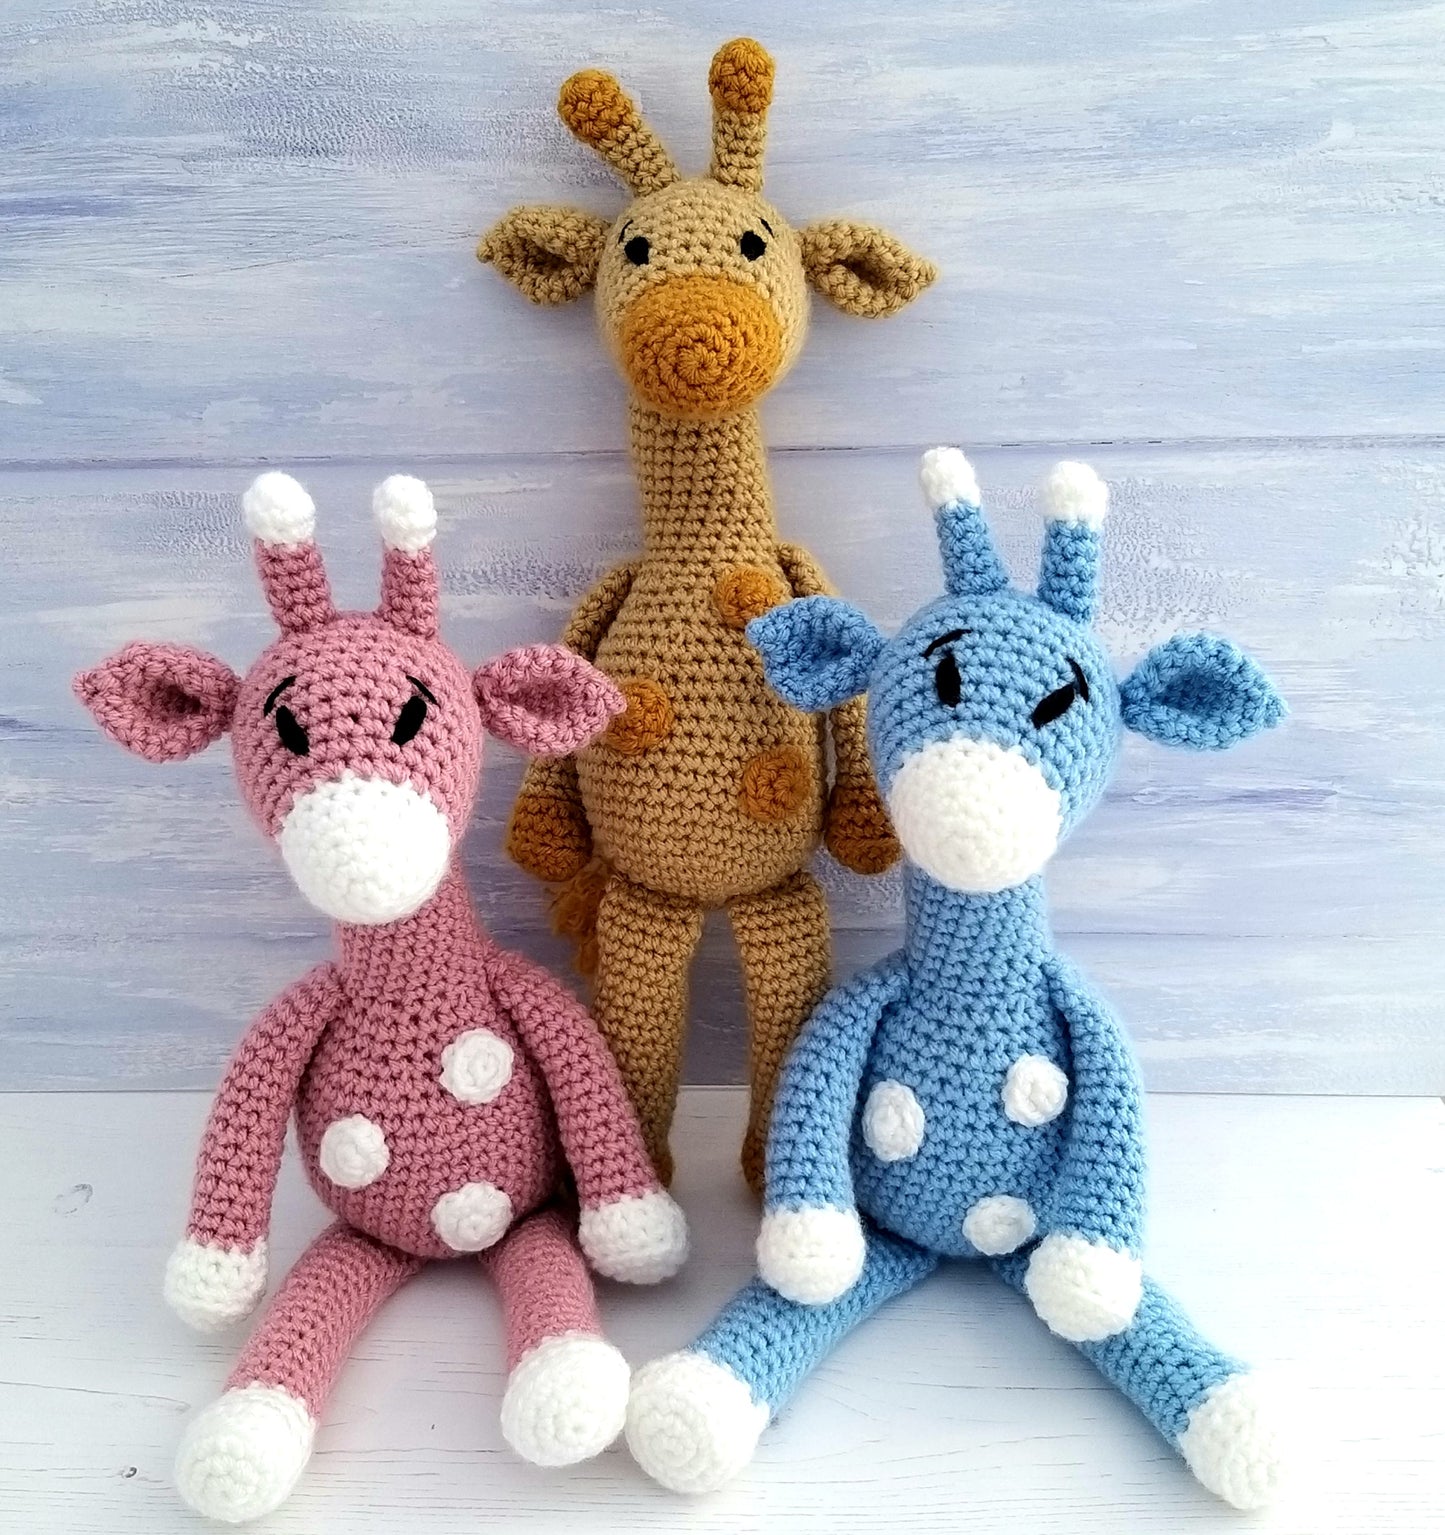 Toy Crochet Giraffes - Aimee, Alice and Albert